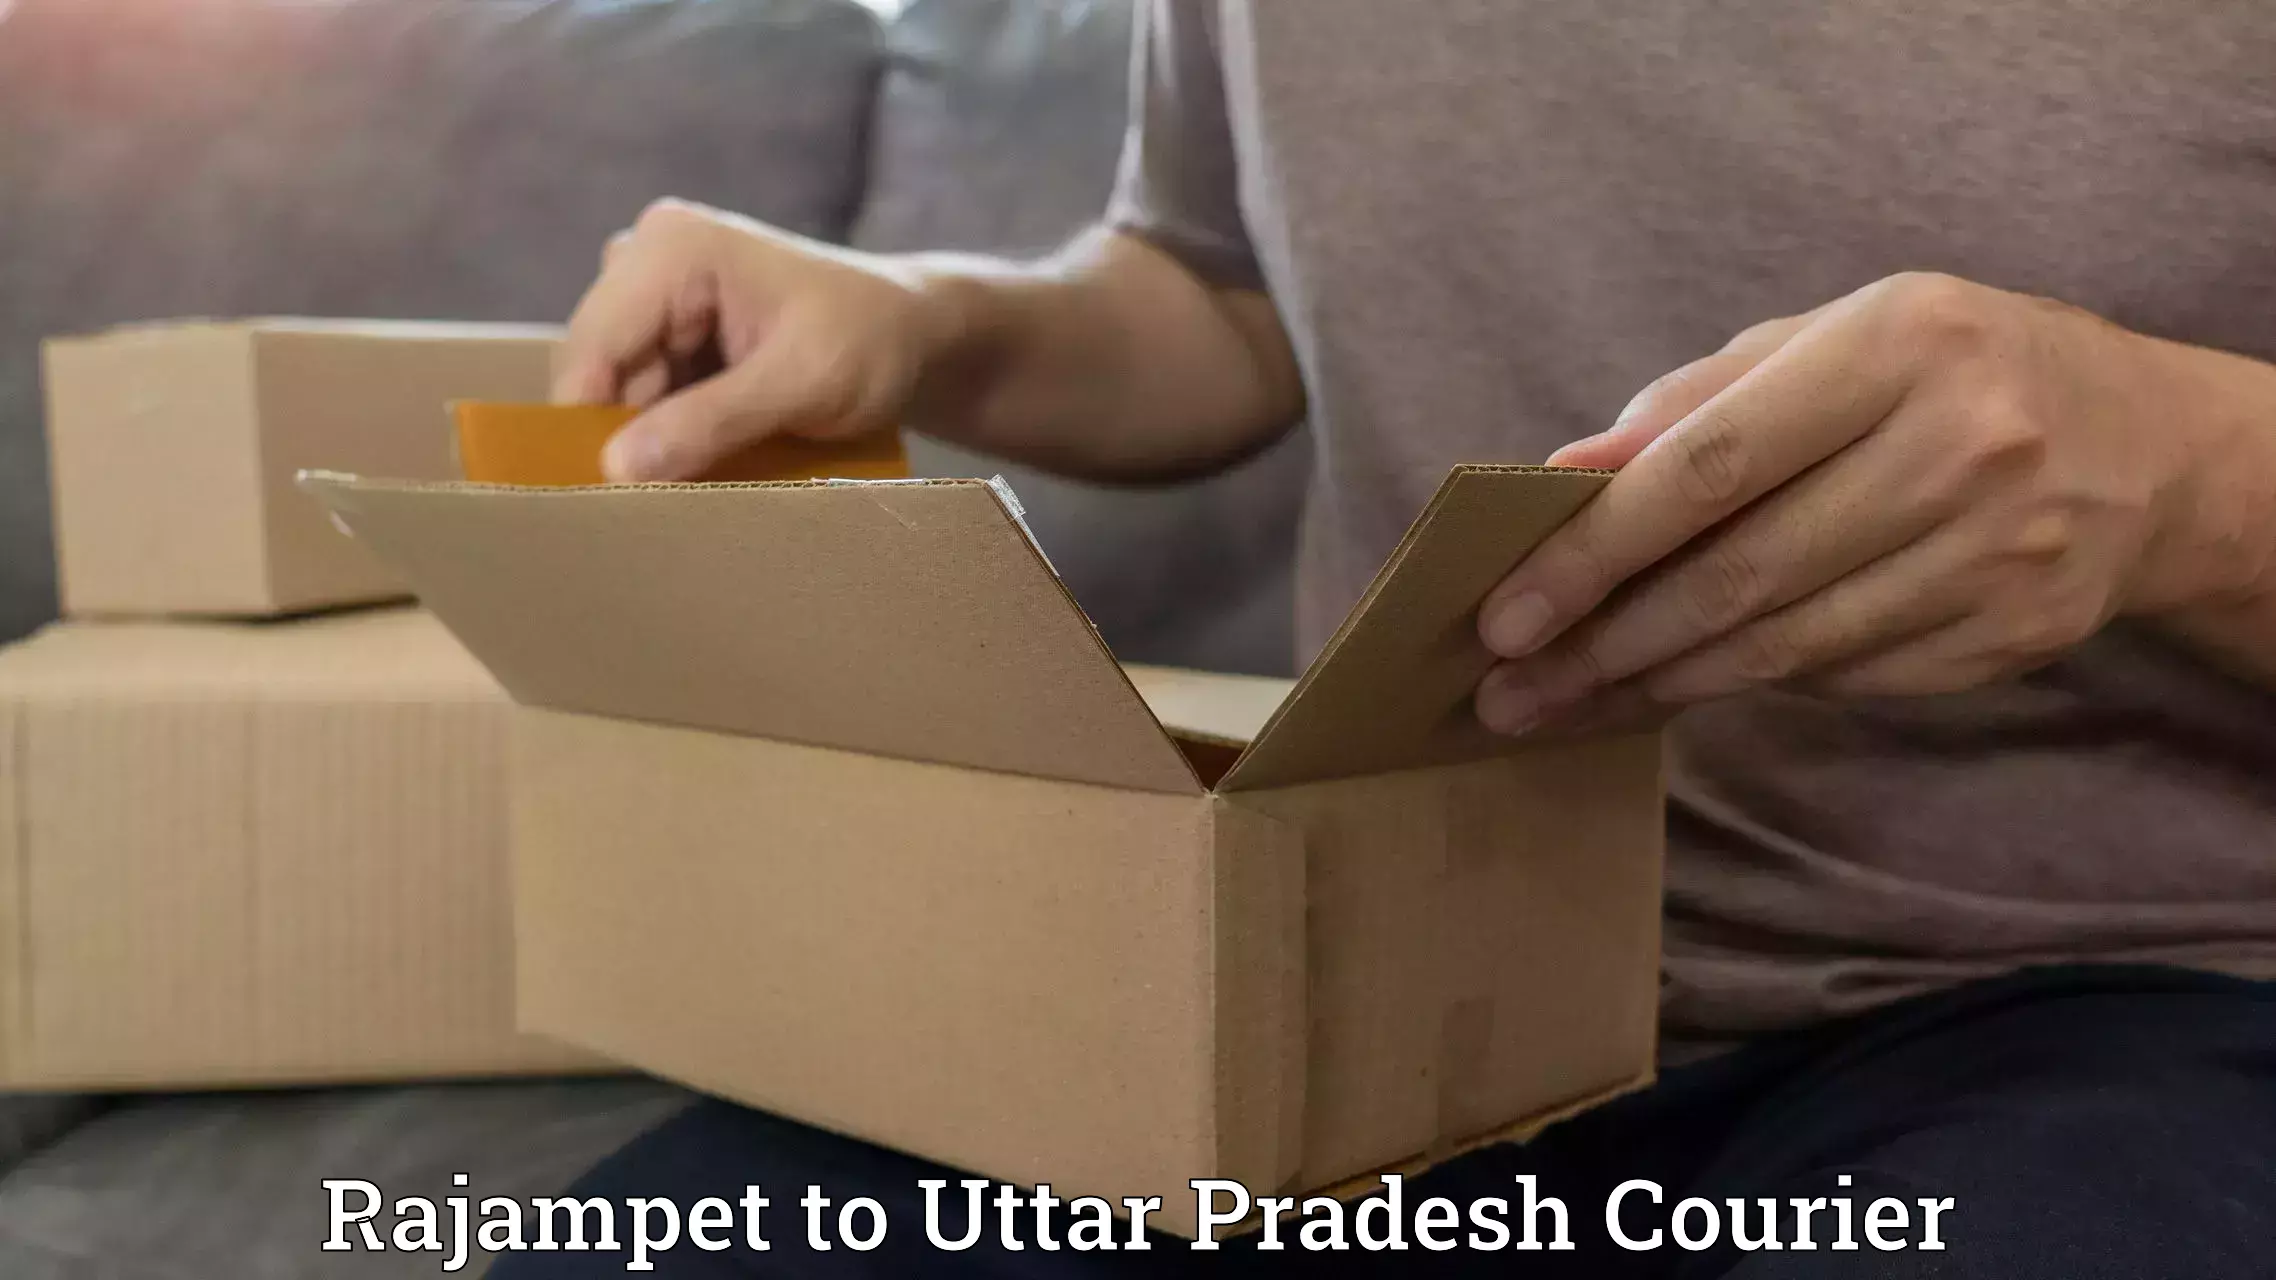 Doorstep delivery service Rajampet to Aligarh Muslim University